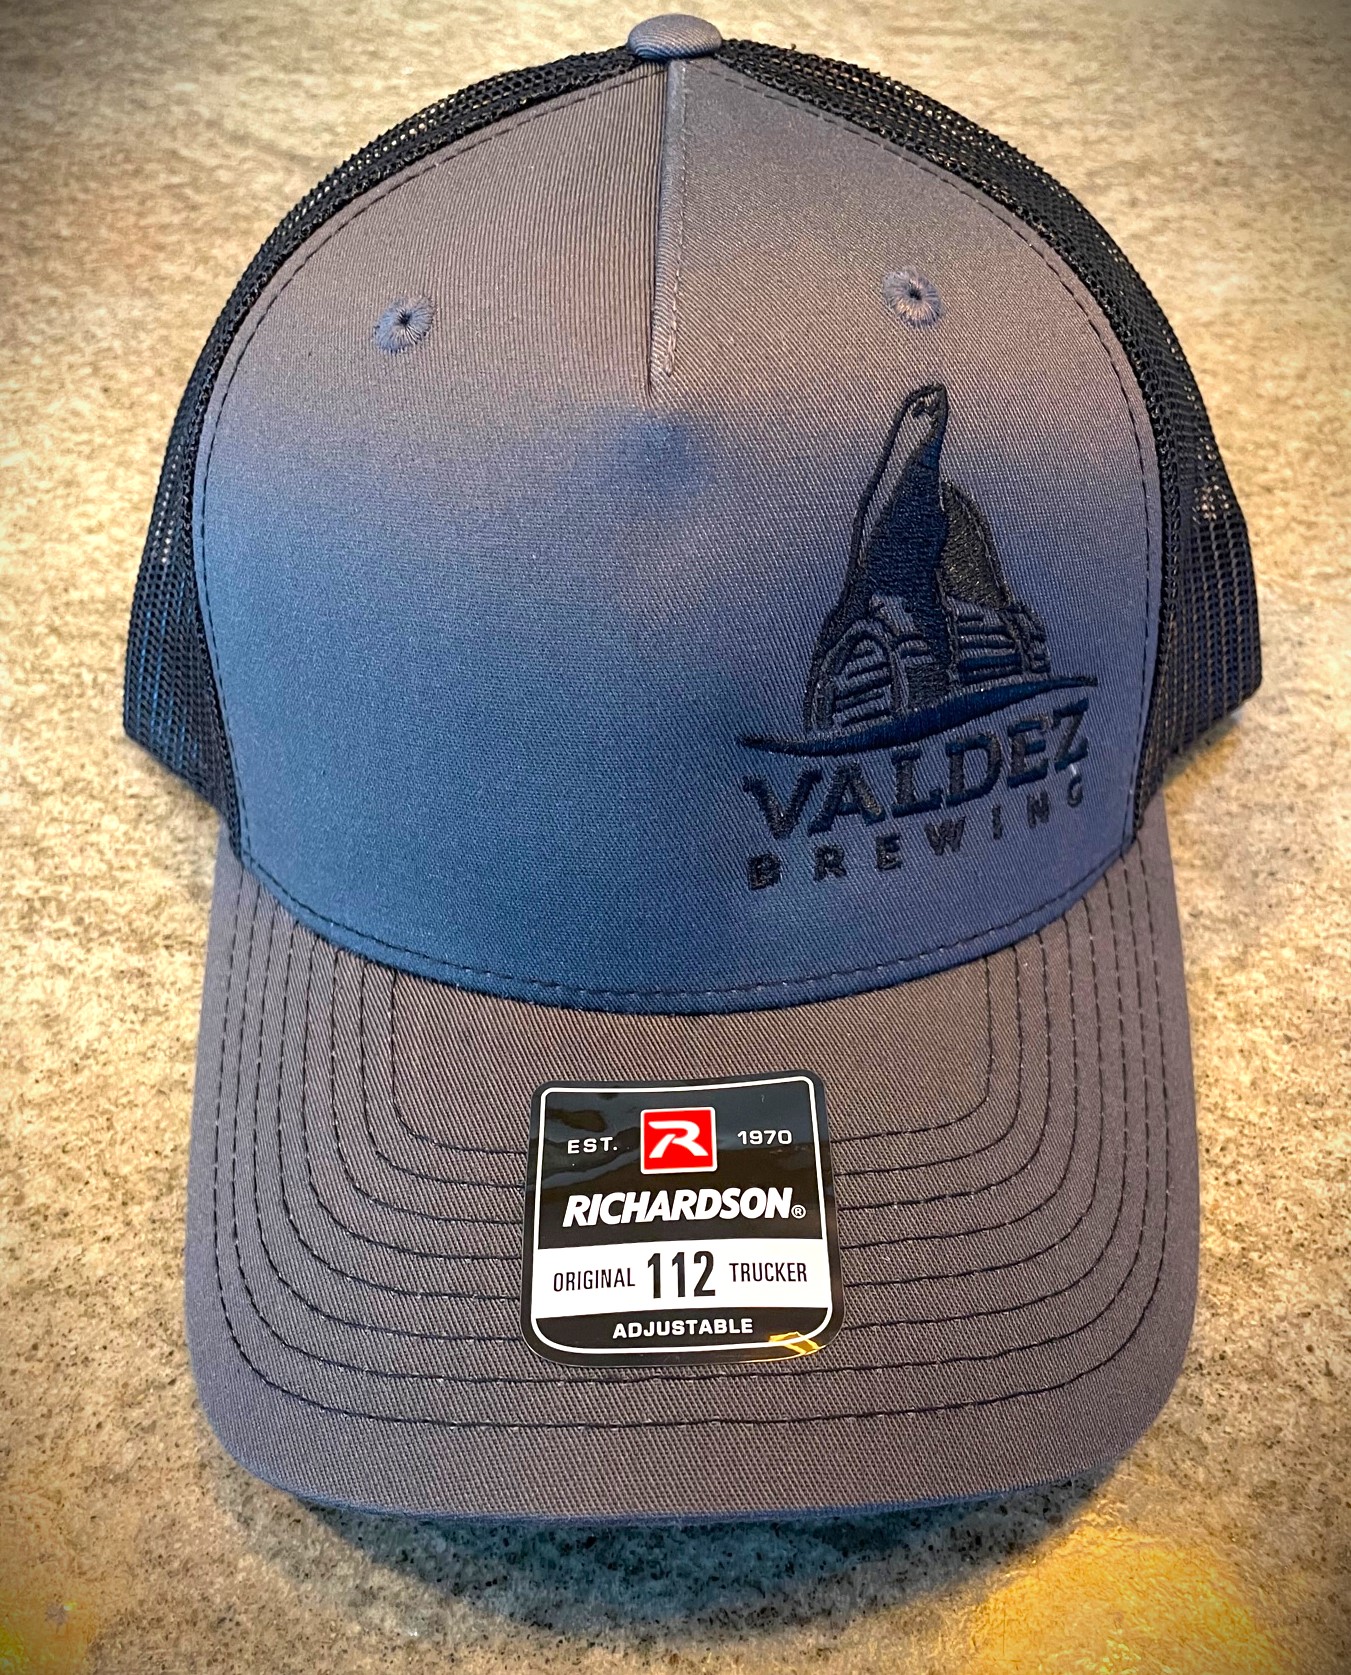 Valdez Brewing Trucker Hat - Valdez Brewing